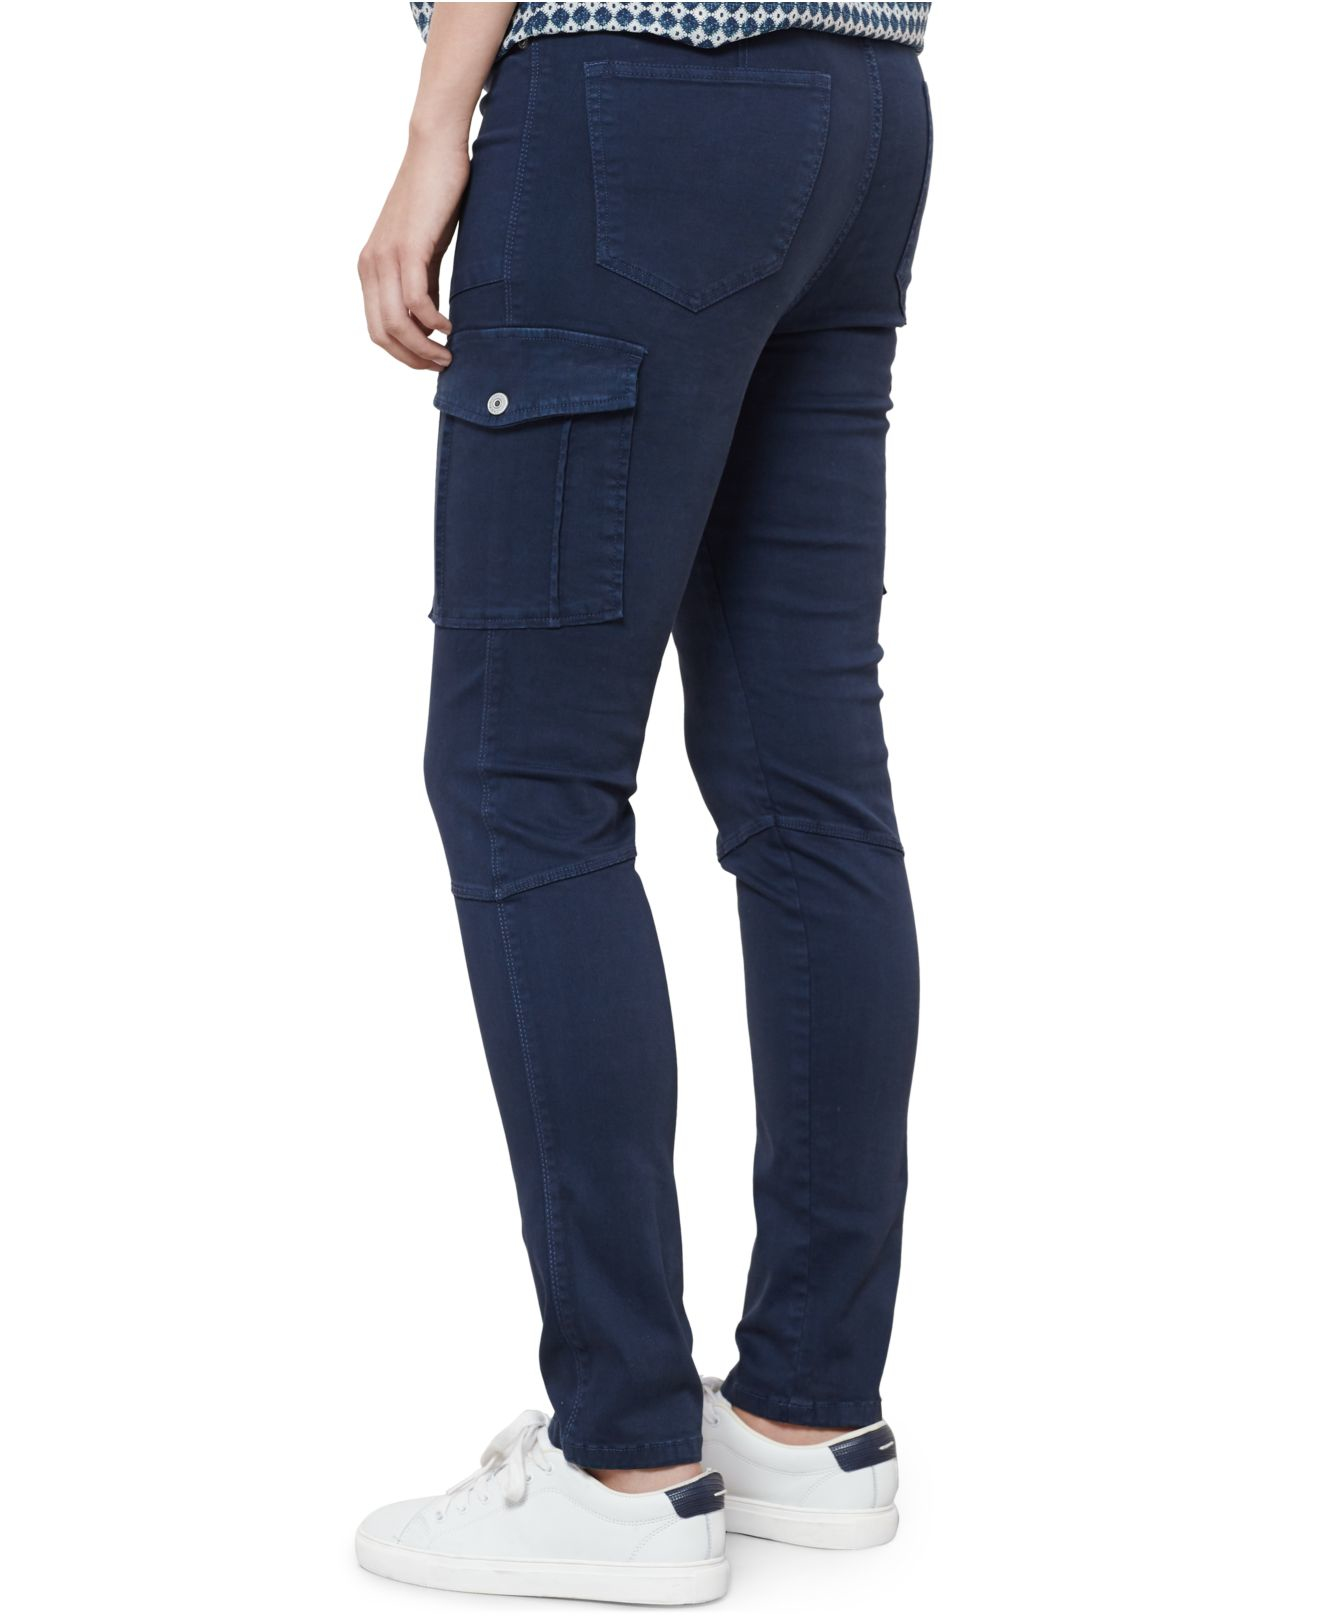 Lyst - Violeta By Mango Plus Size Skinny Cargo Pants in Blue